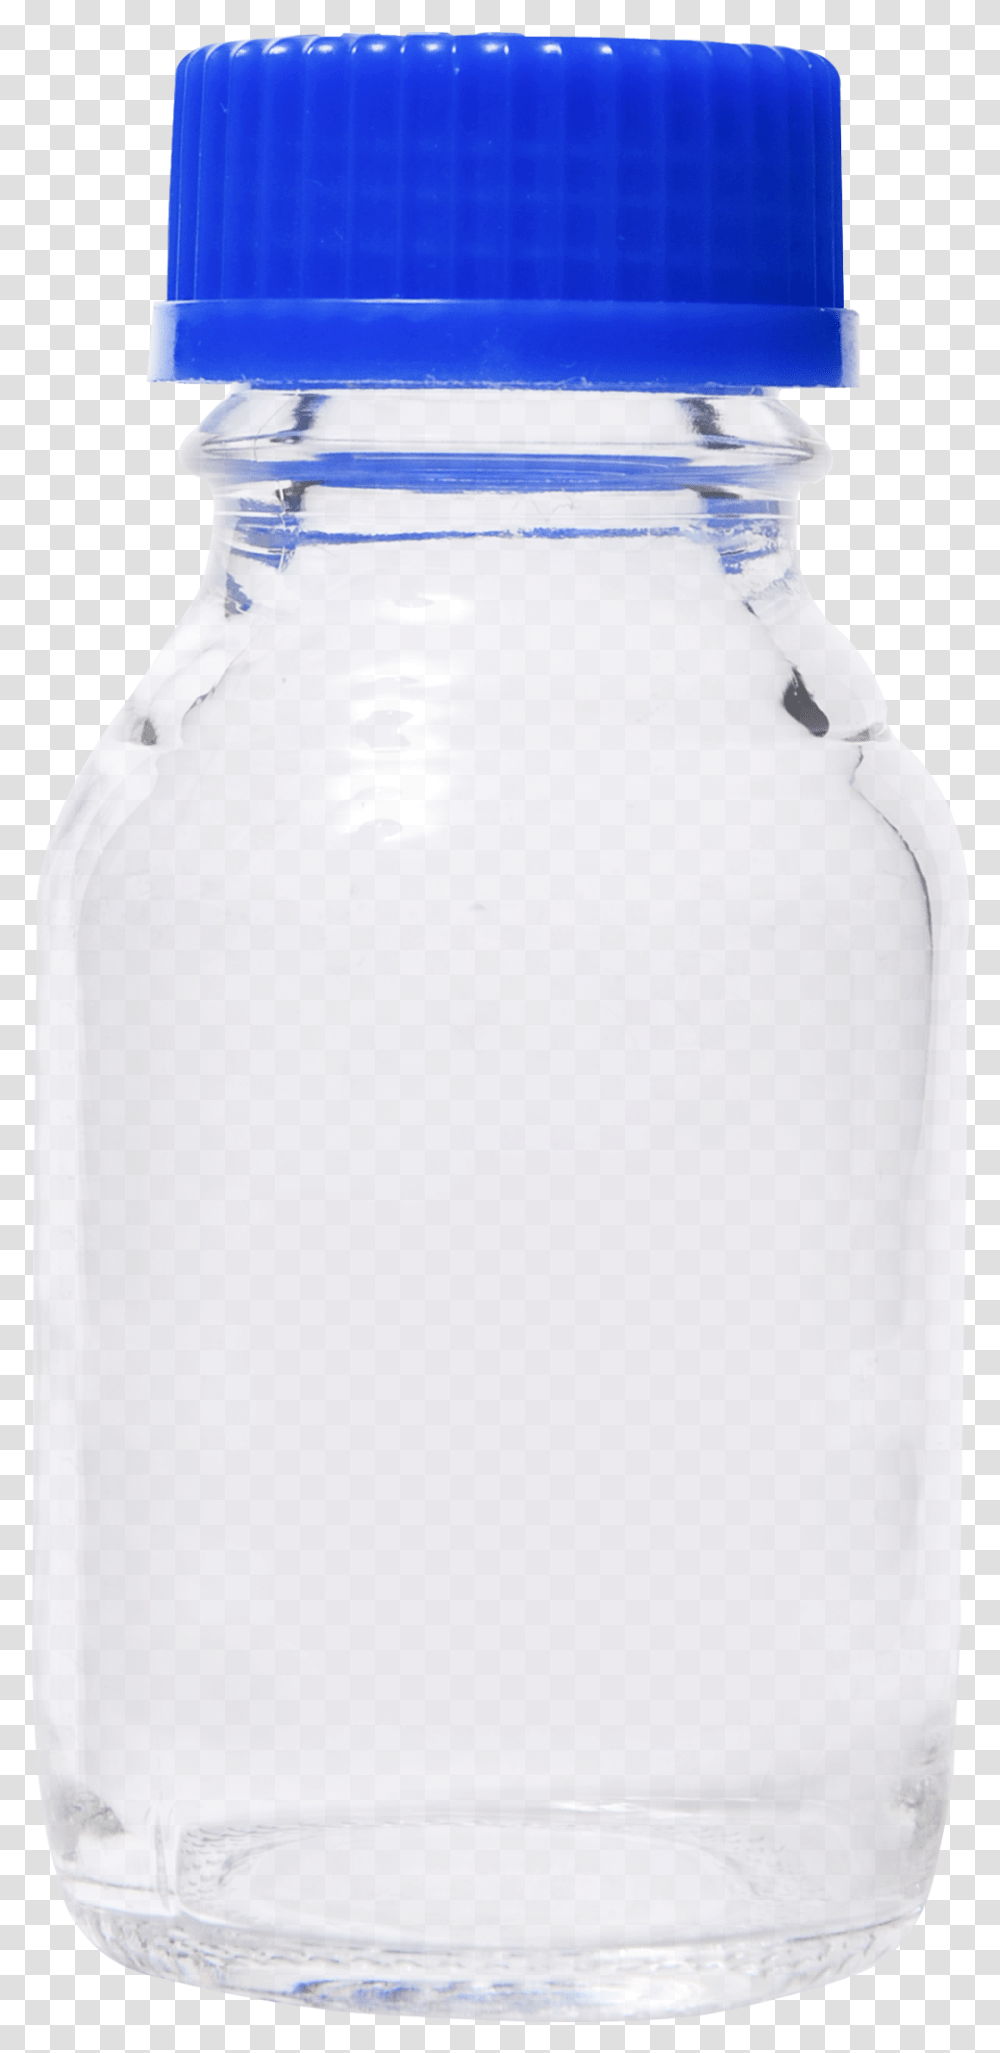 Small Water Bottle With Glass Bottle, Jar, Milk, Beverage, Drink Transparent Png